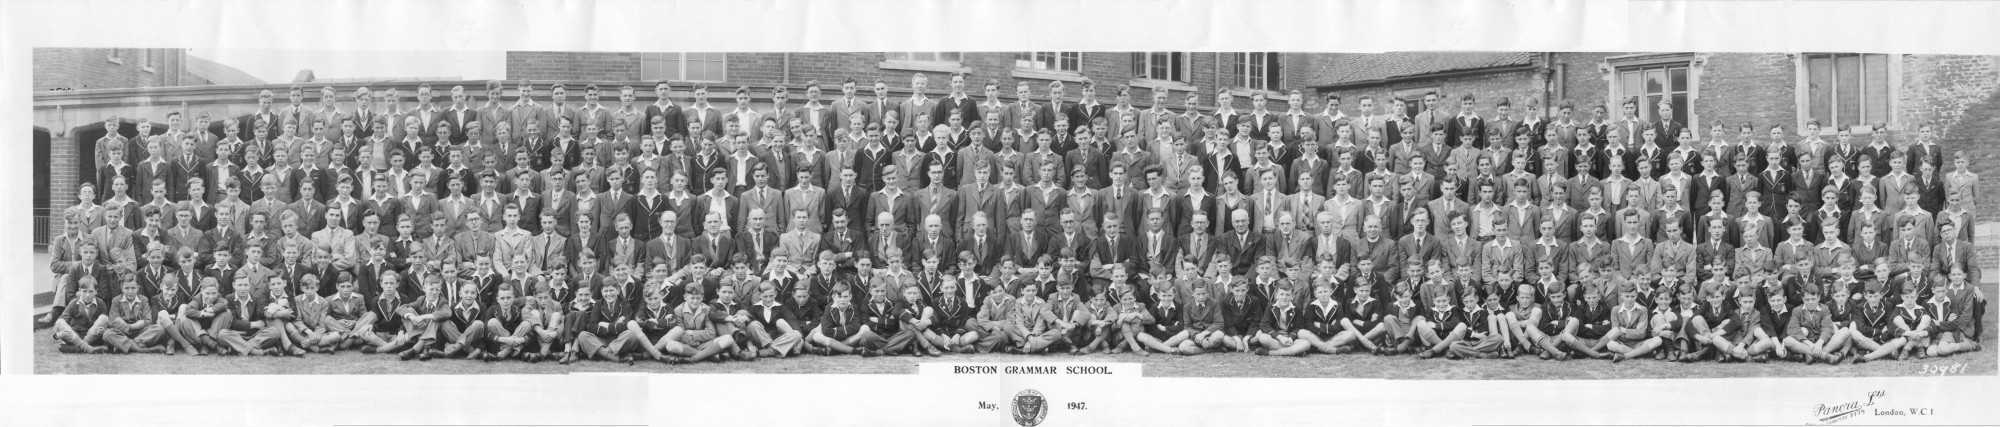 Boston Grammar School - whole school, panoramic photograph (1947)